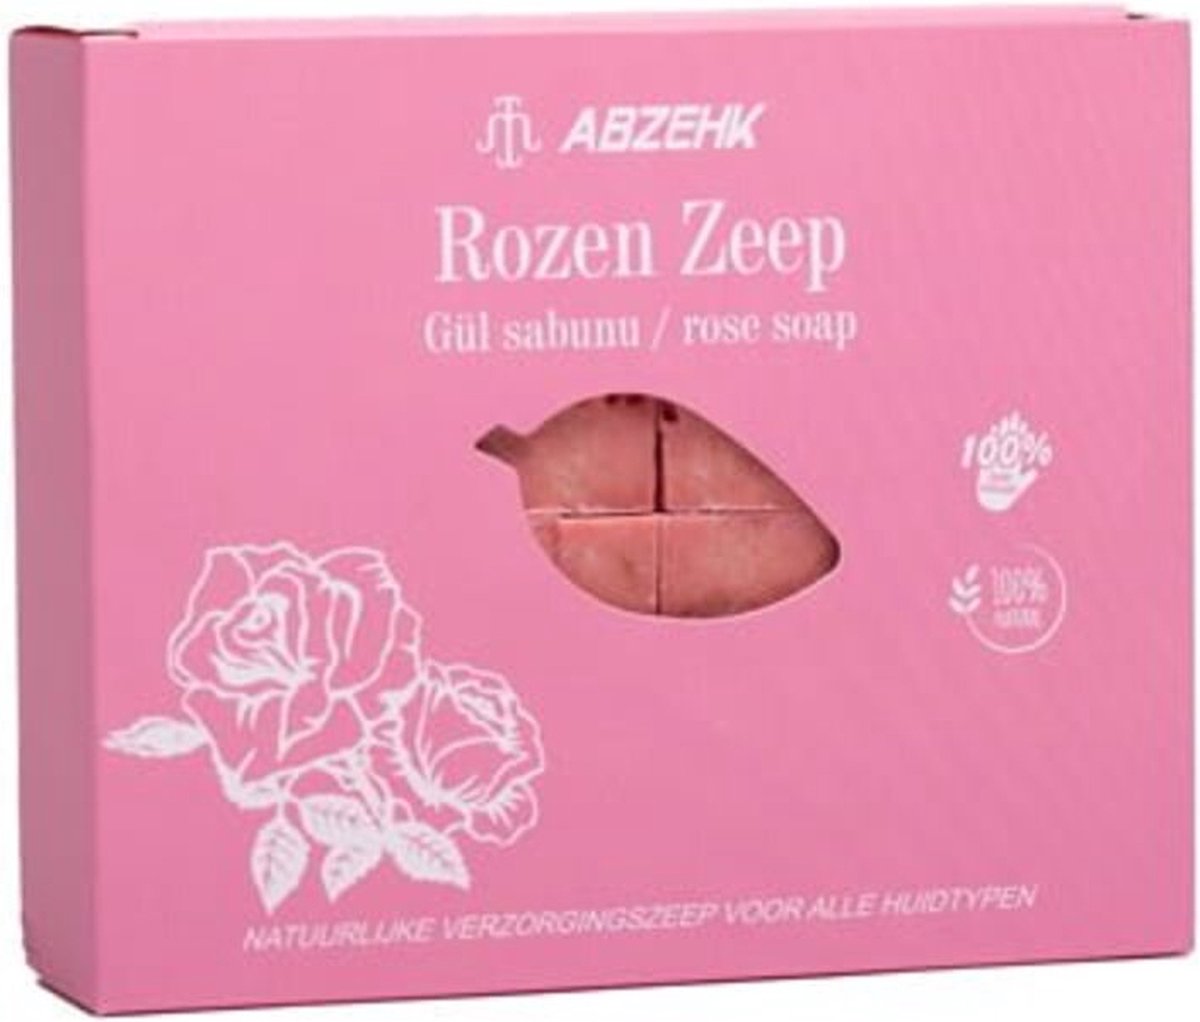 Abzehk - Handzeep, Sabun, Handsoap - Rozen, Gül, Rose - 125gr